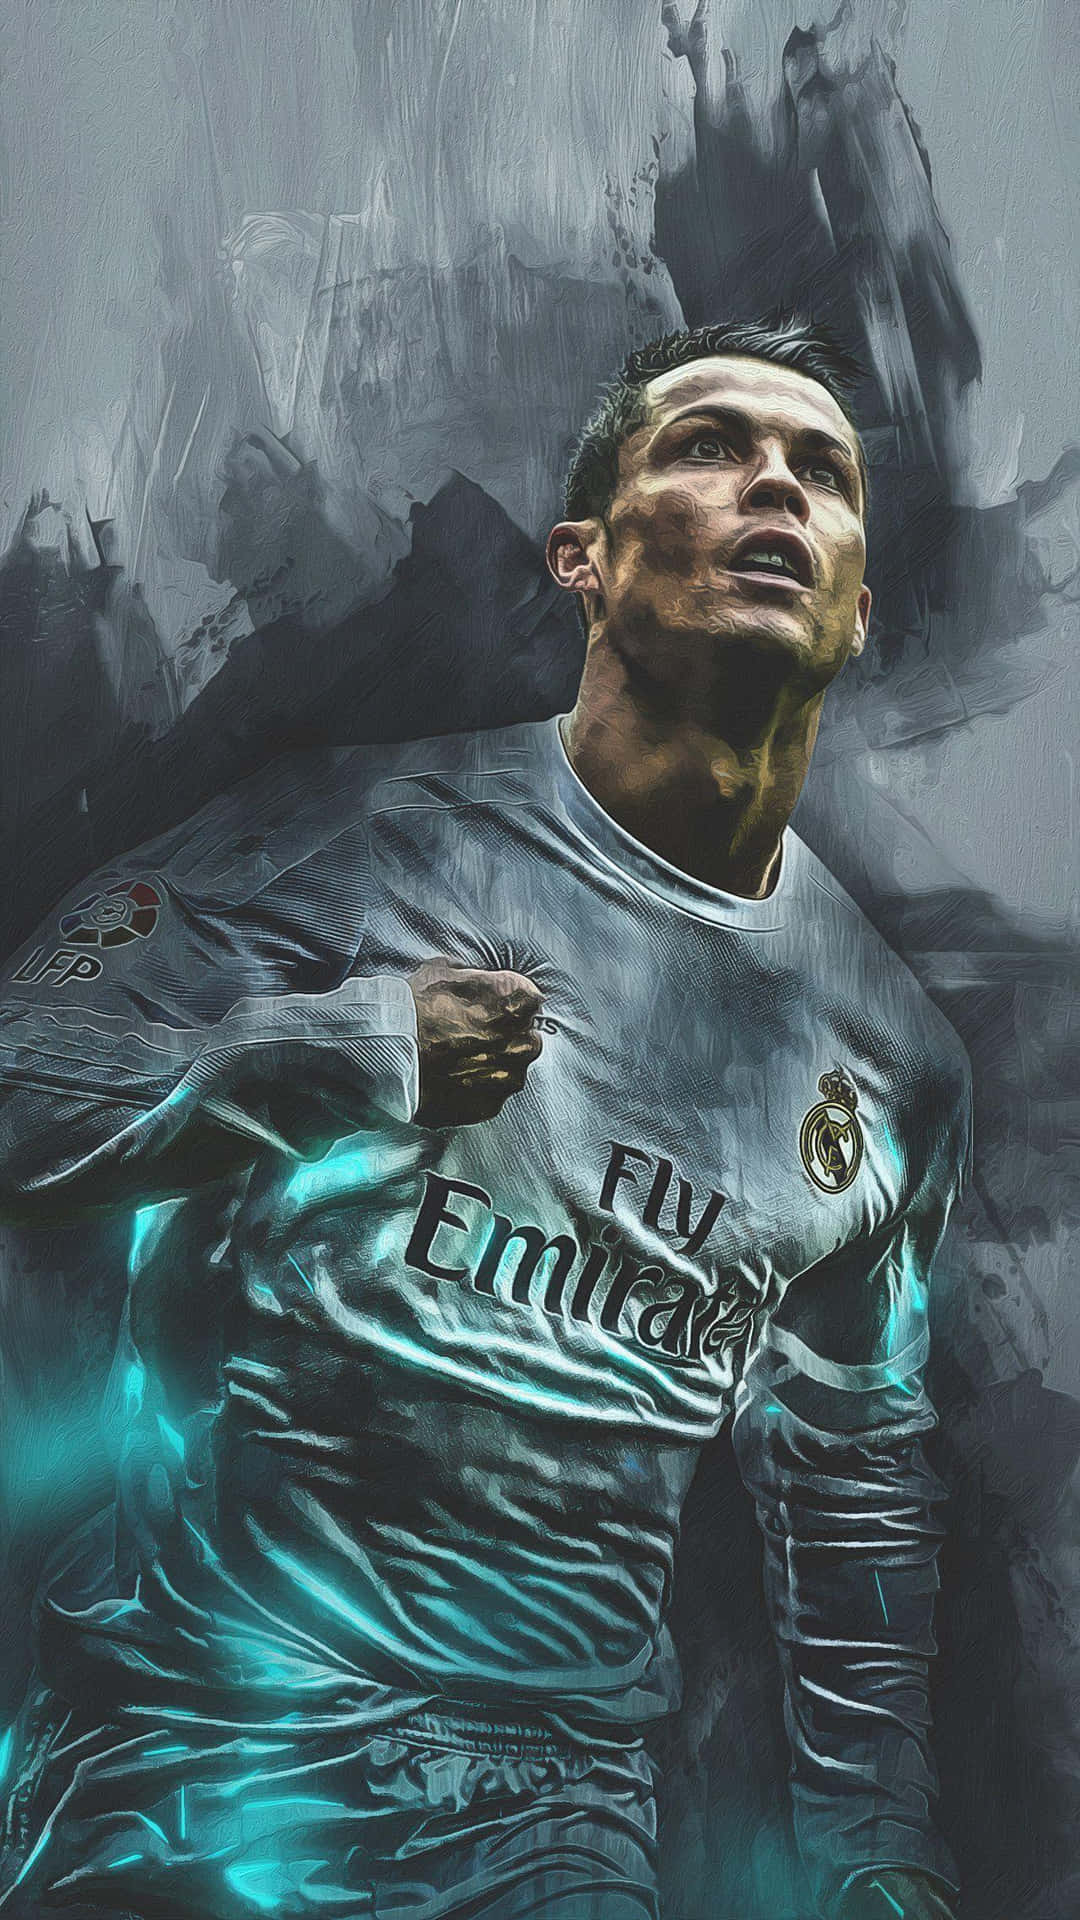 Cristiano Ronaldo celebrates after scoring during a match Wallpaper